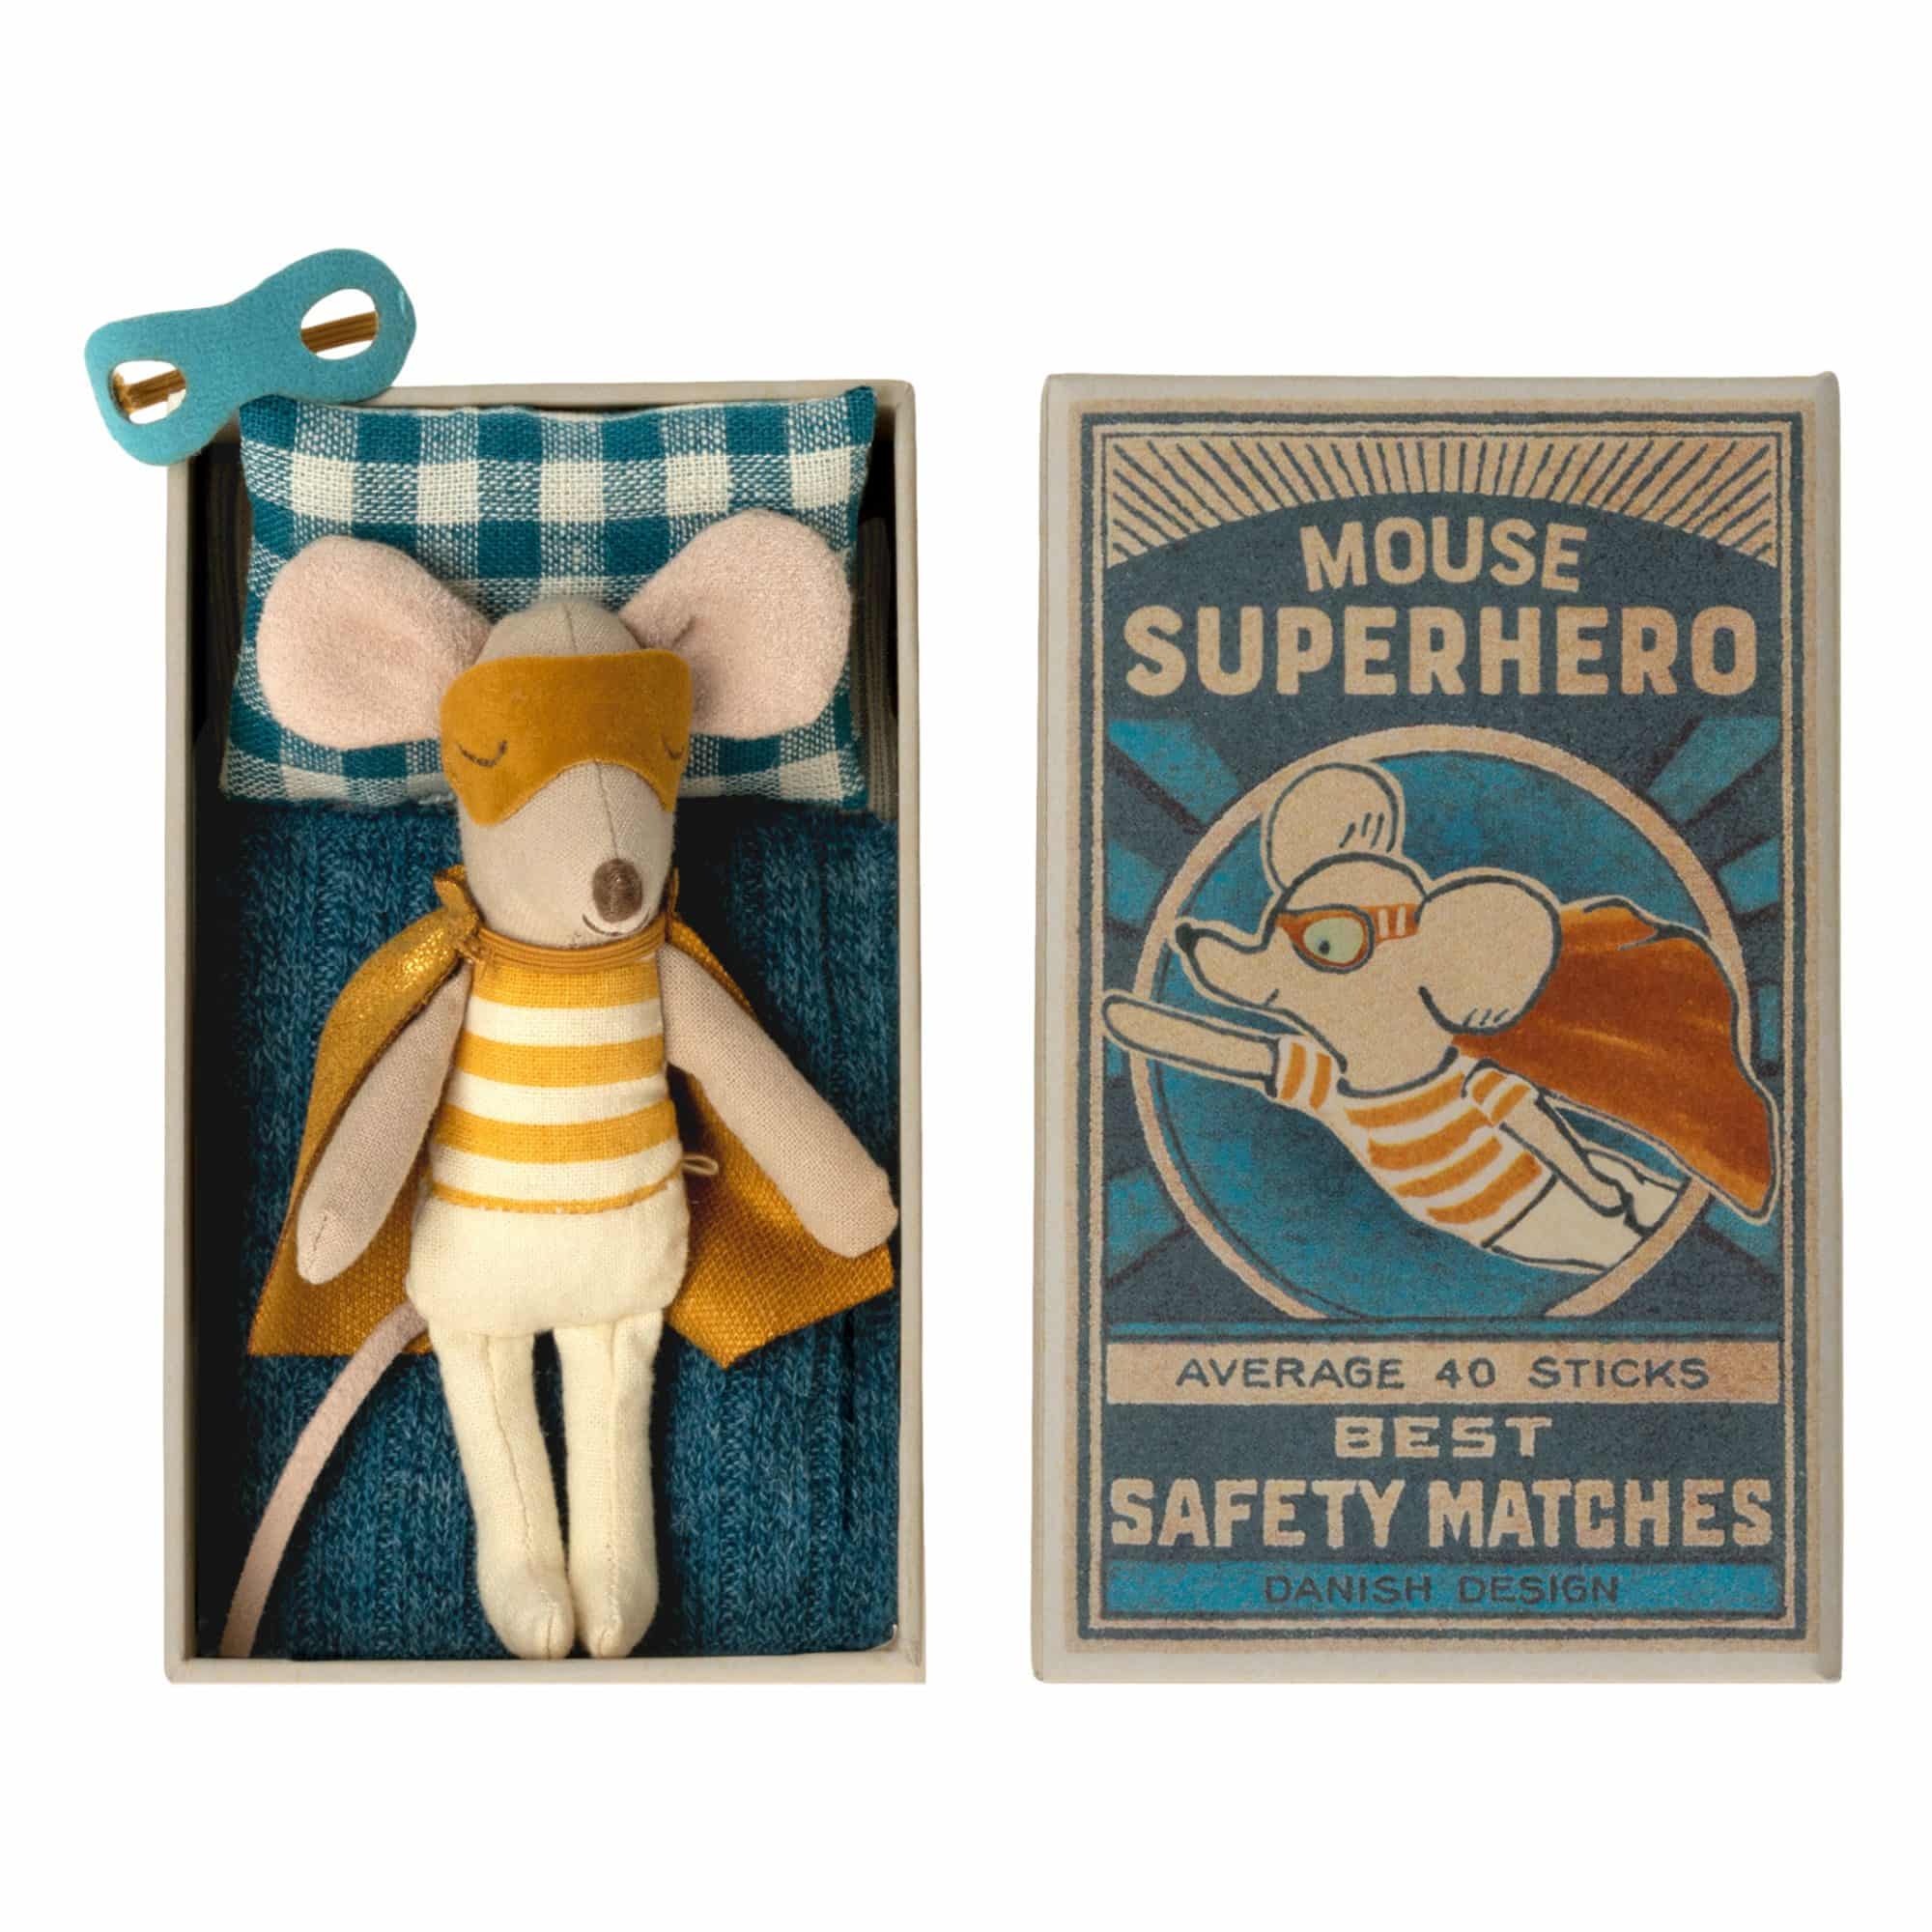 Superhero mouse - little brother | Maileg Mini-Me